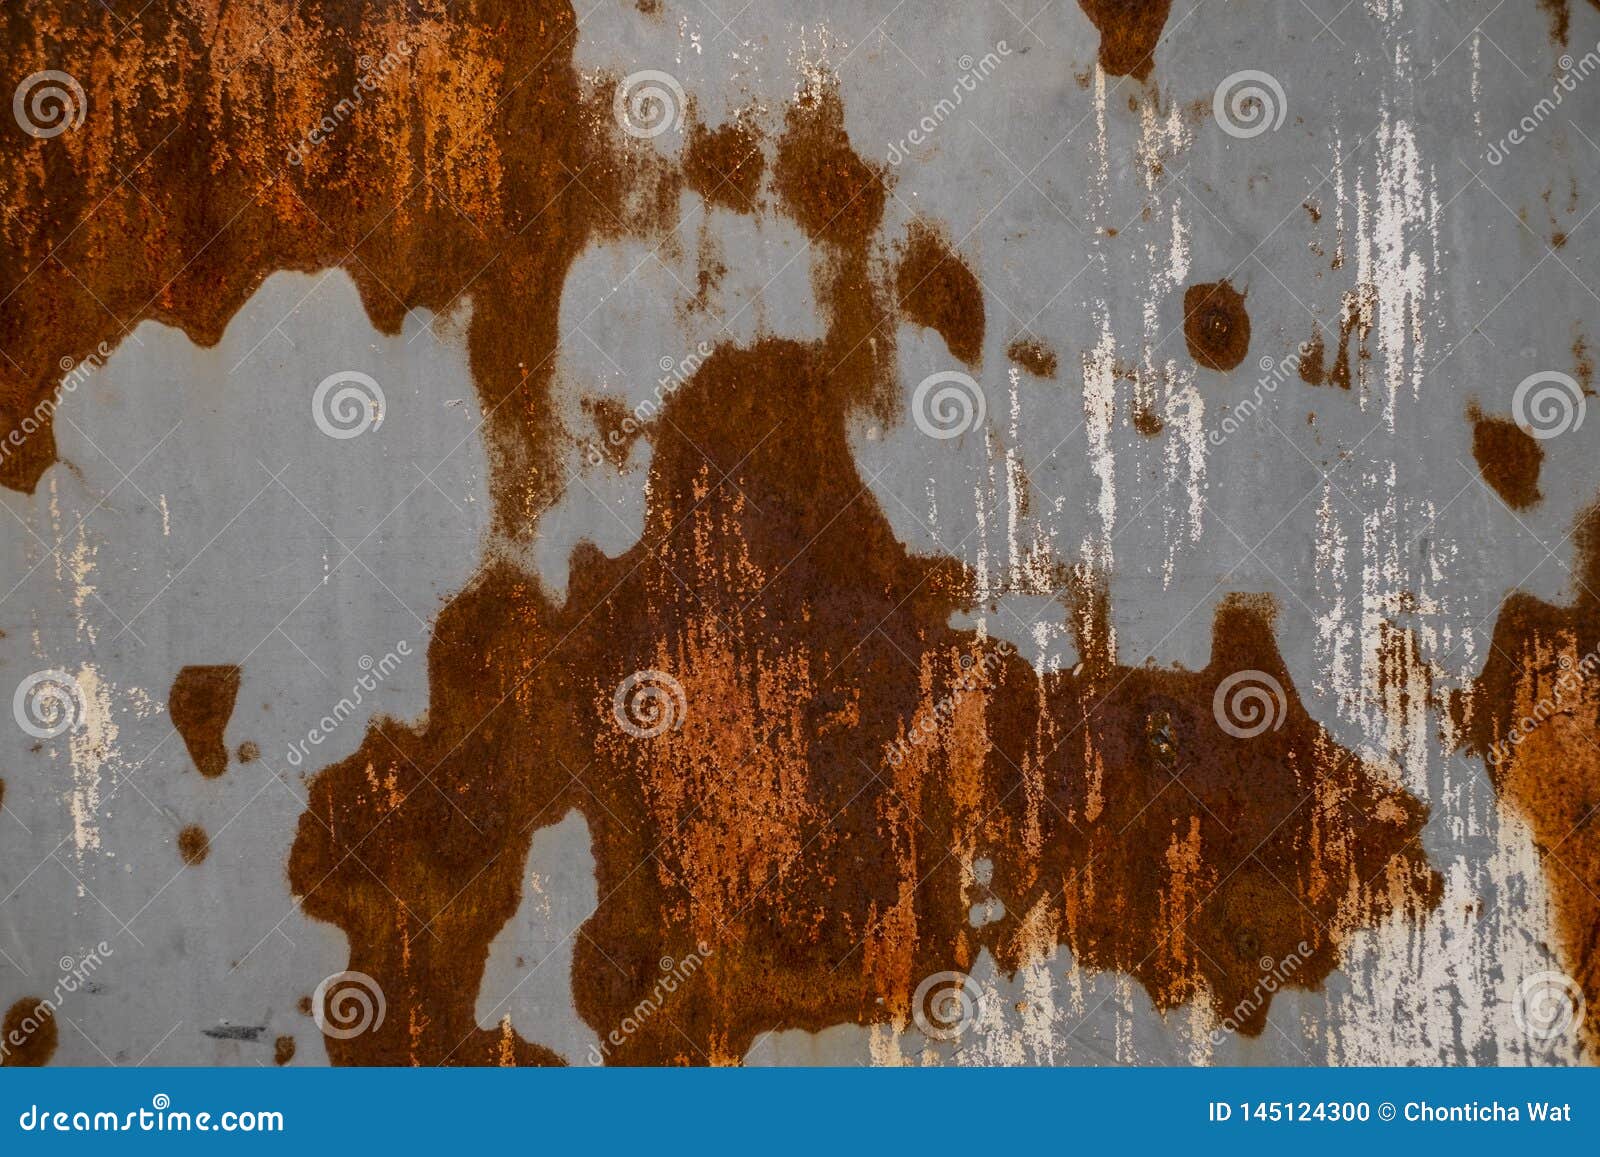 Can sheet metal rust фото 25